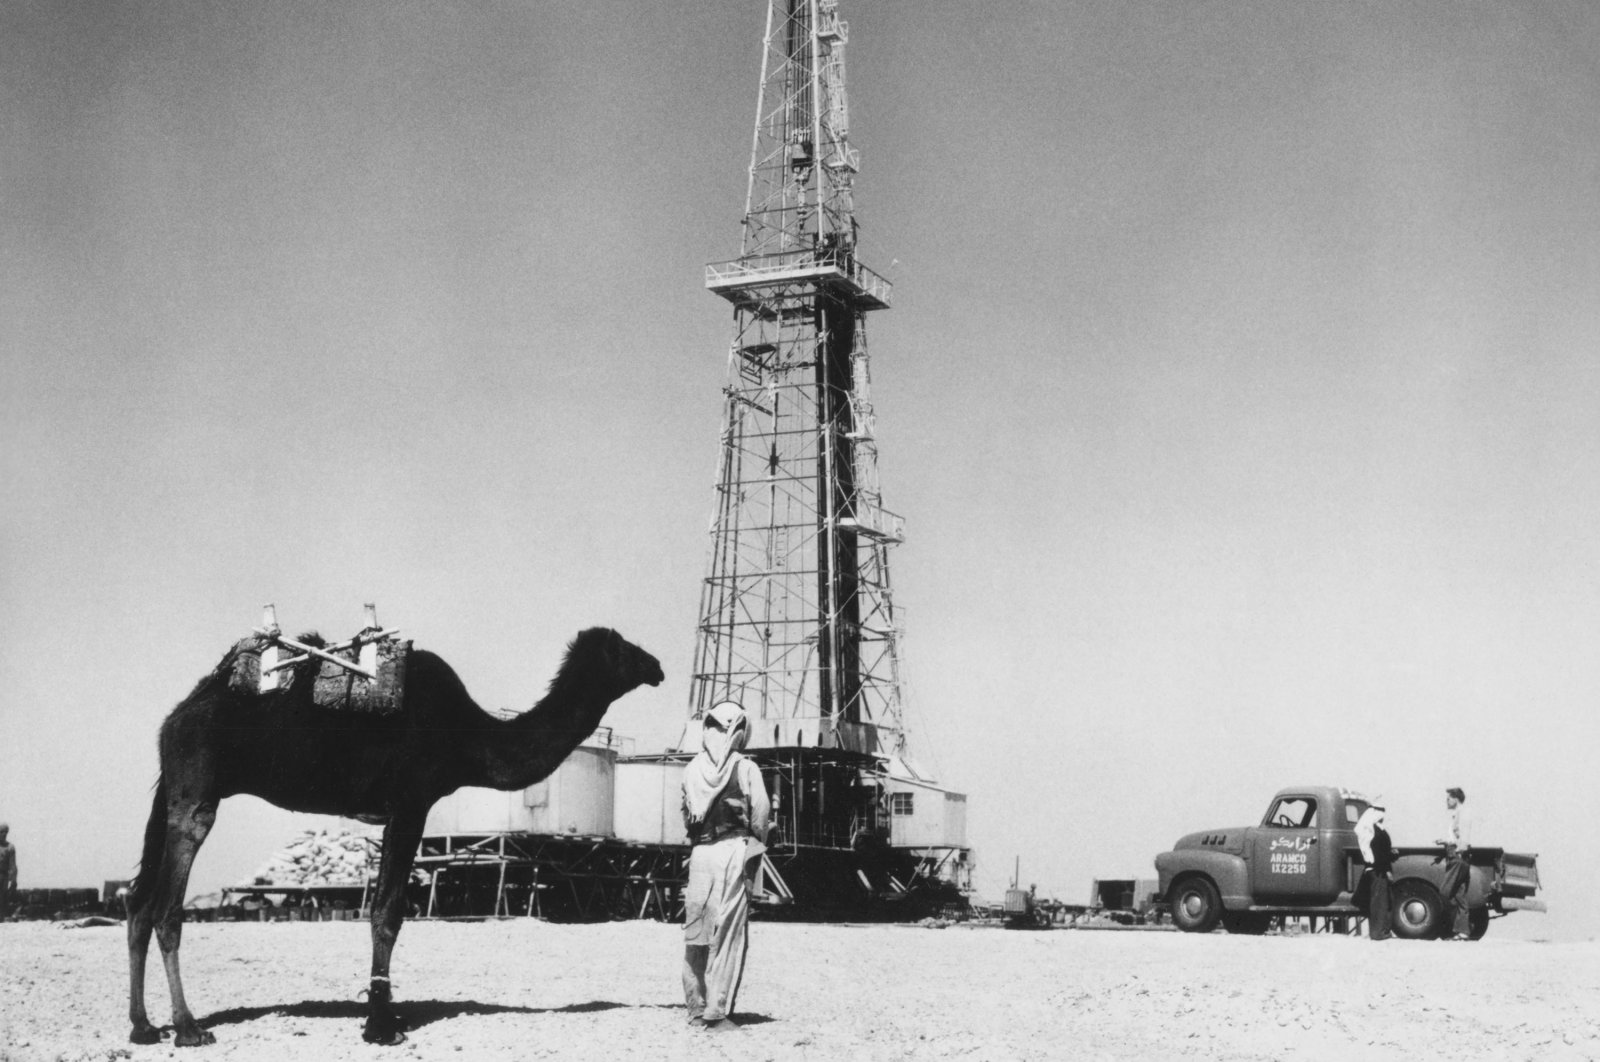 Mr Five Percent: Kisah kompleks minyak di Timur Tengah